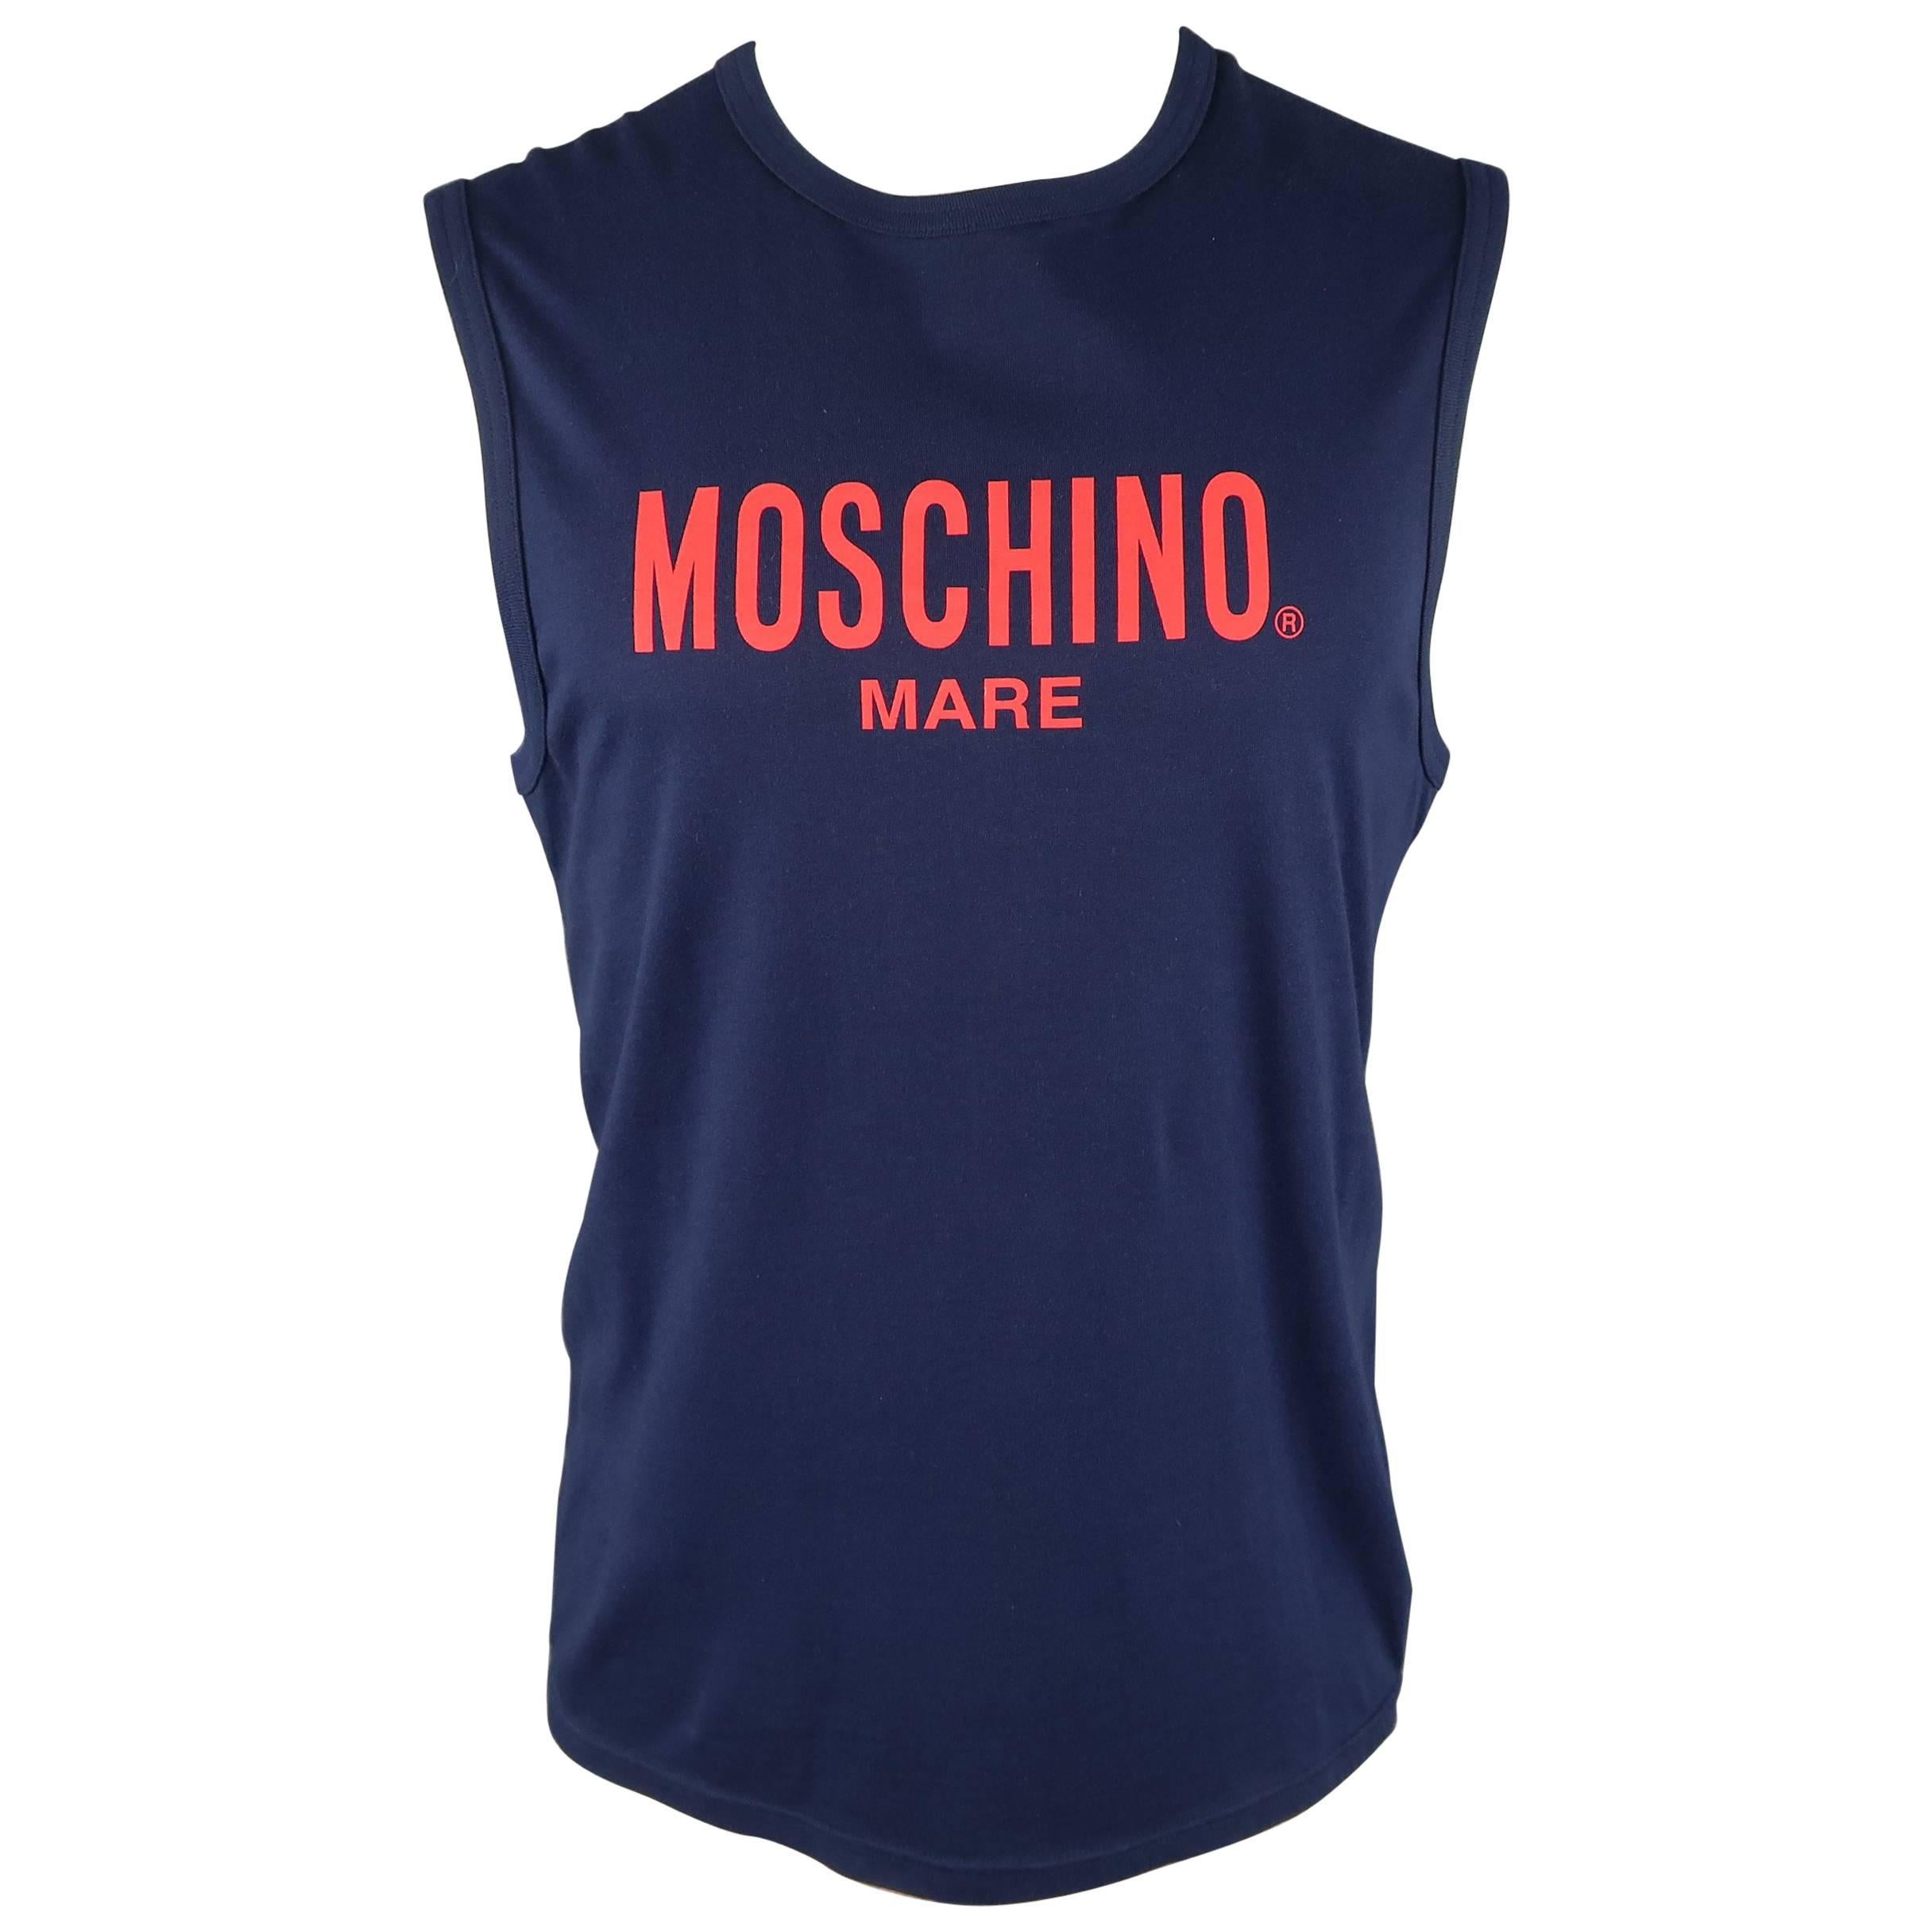 Moschino Mare Men's Navy and Red Logo Cotton Sleeveless T Shirt